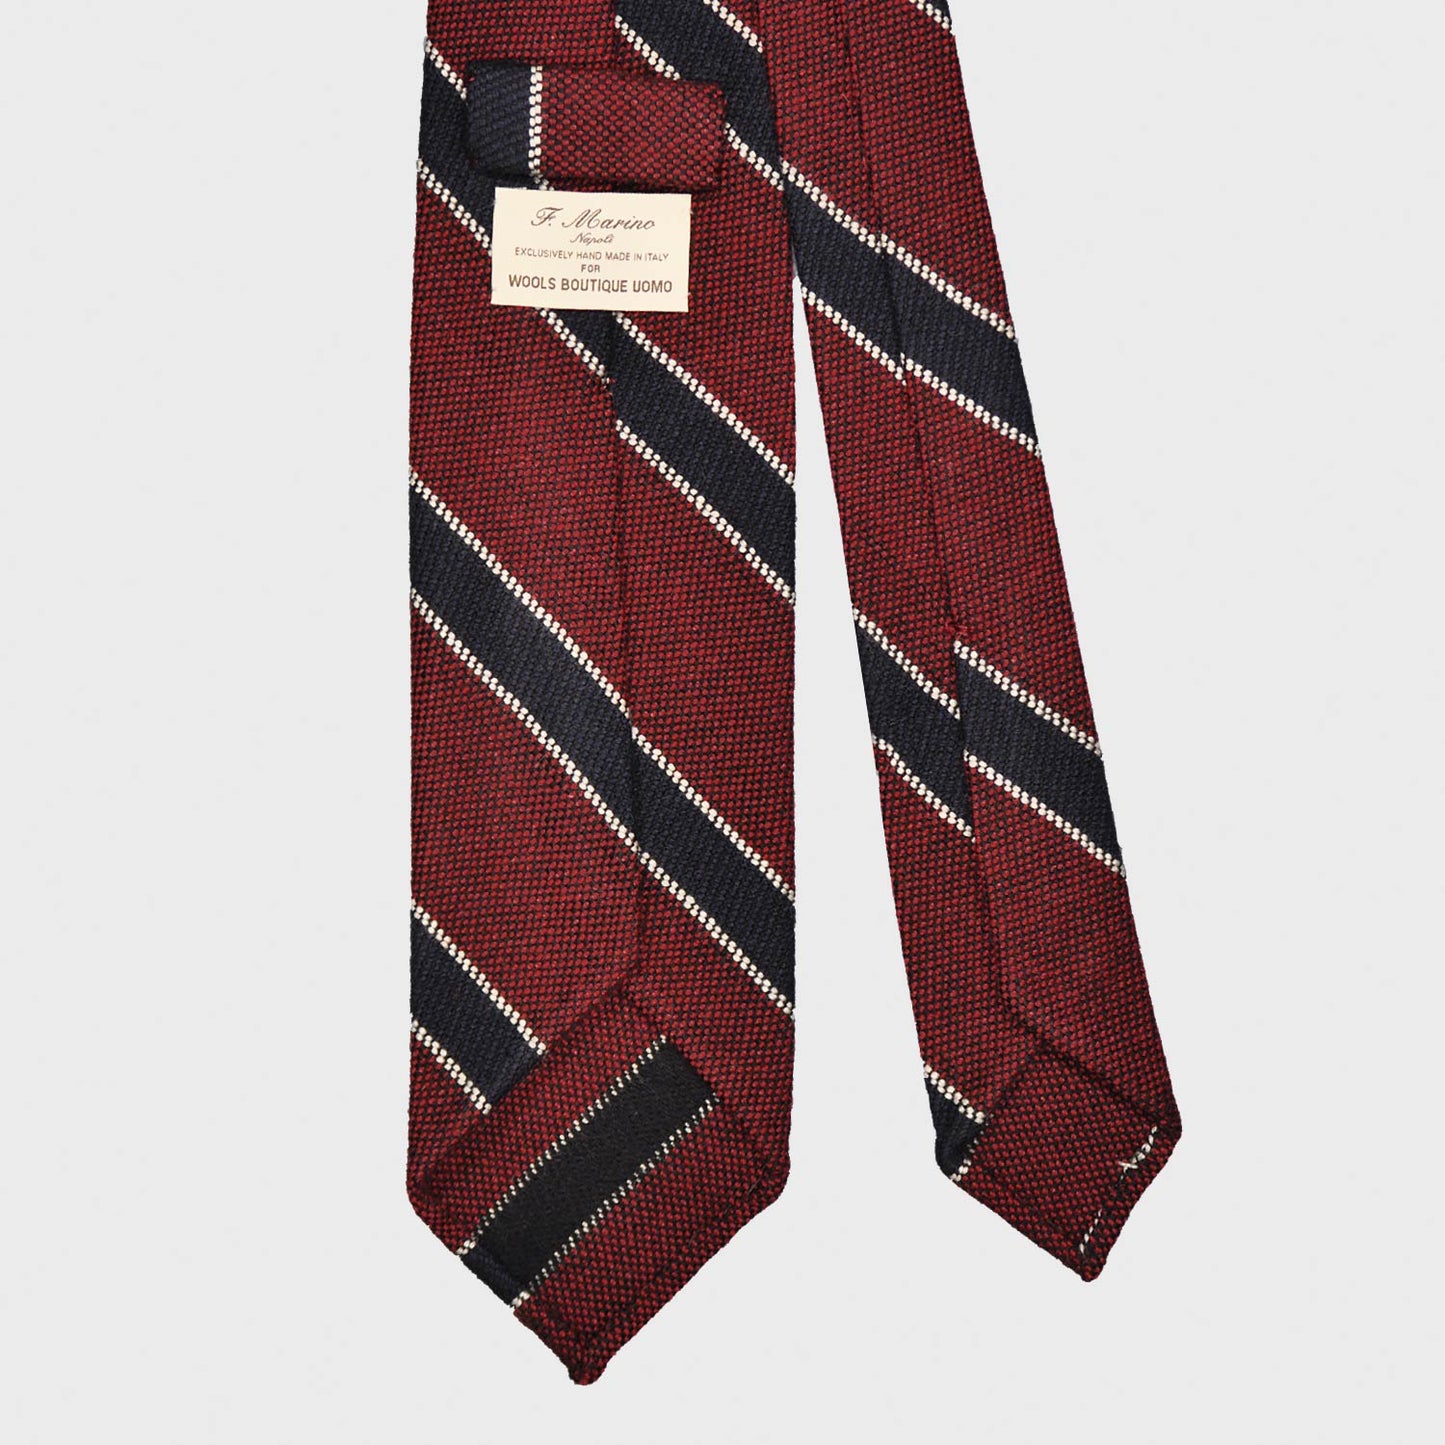 F.Marino Regimental Wool Tie 3 Folds Ruby Red-Wools Boutique Uomo